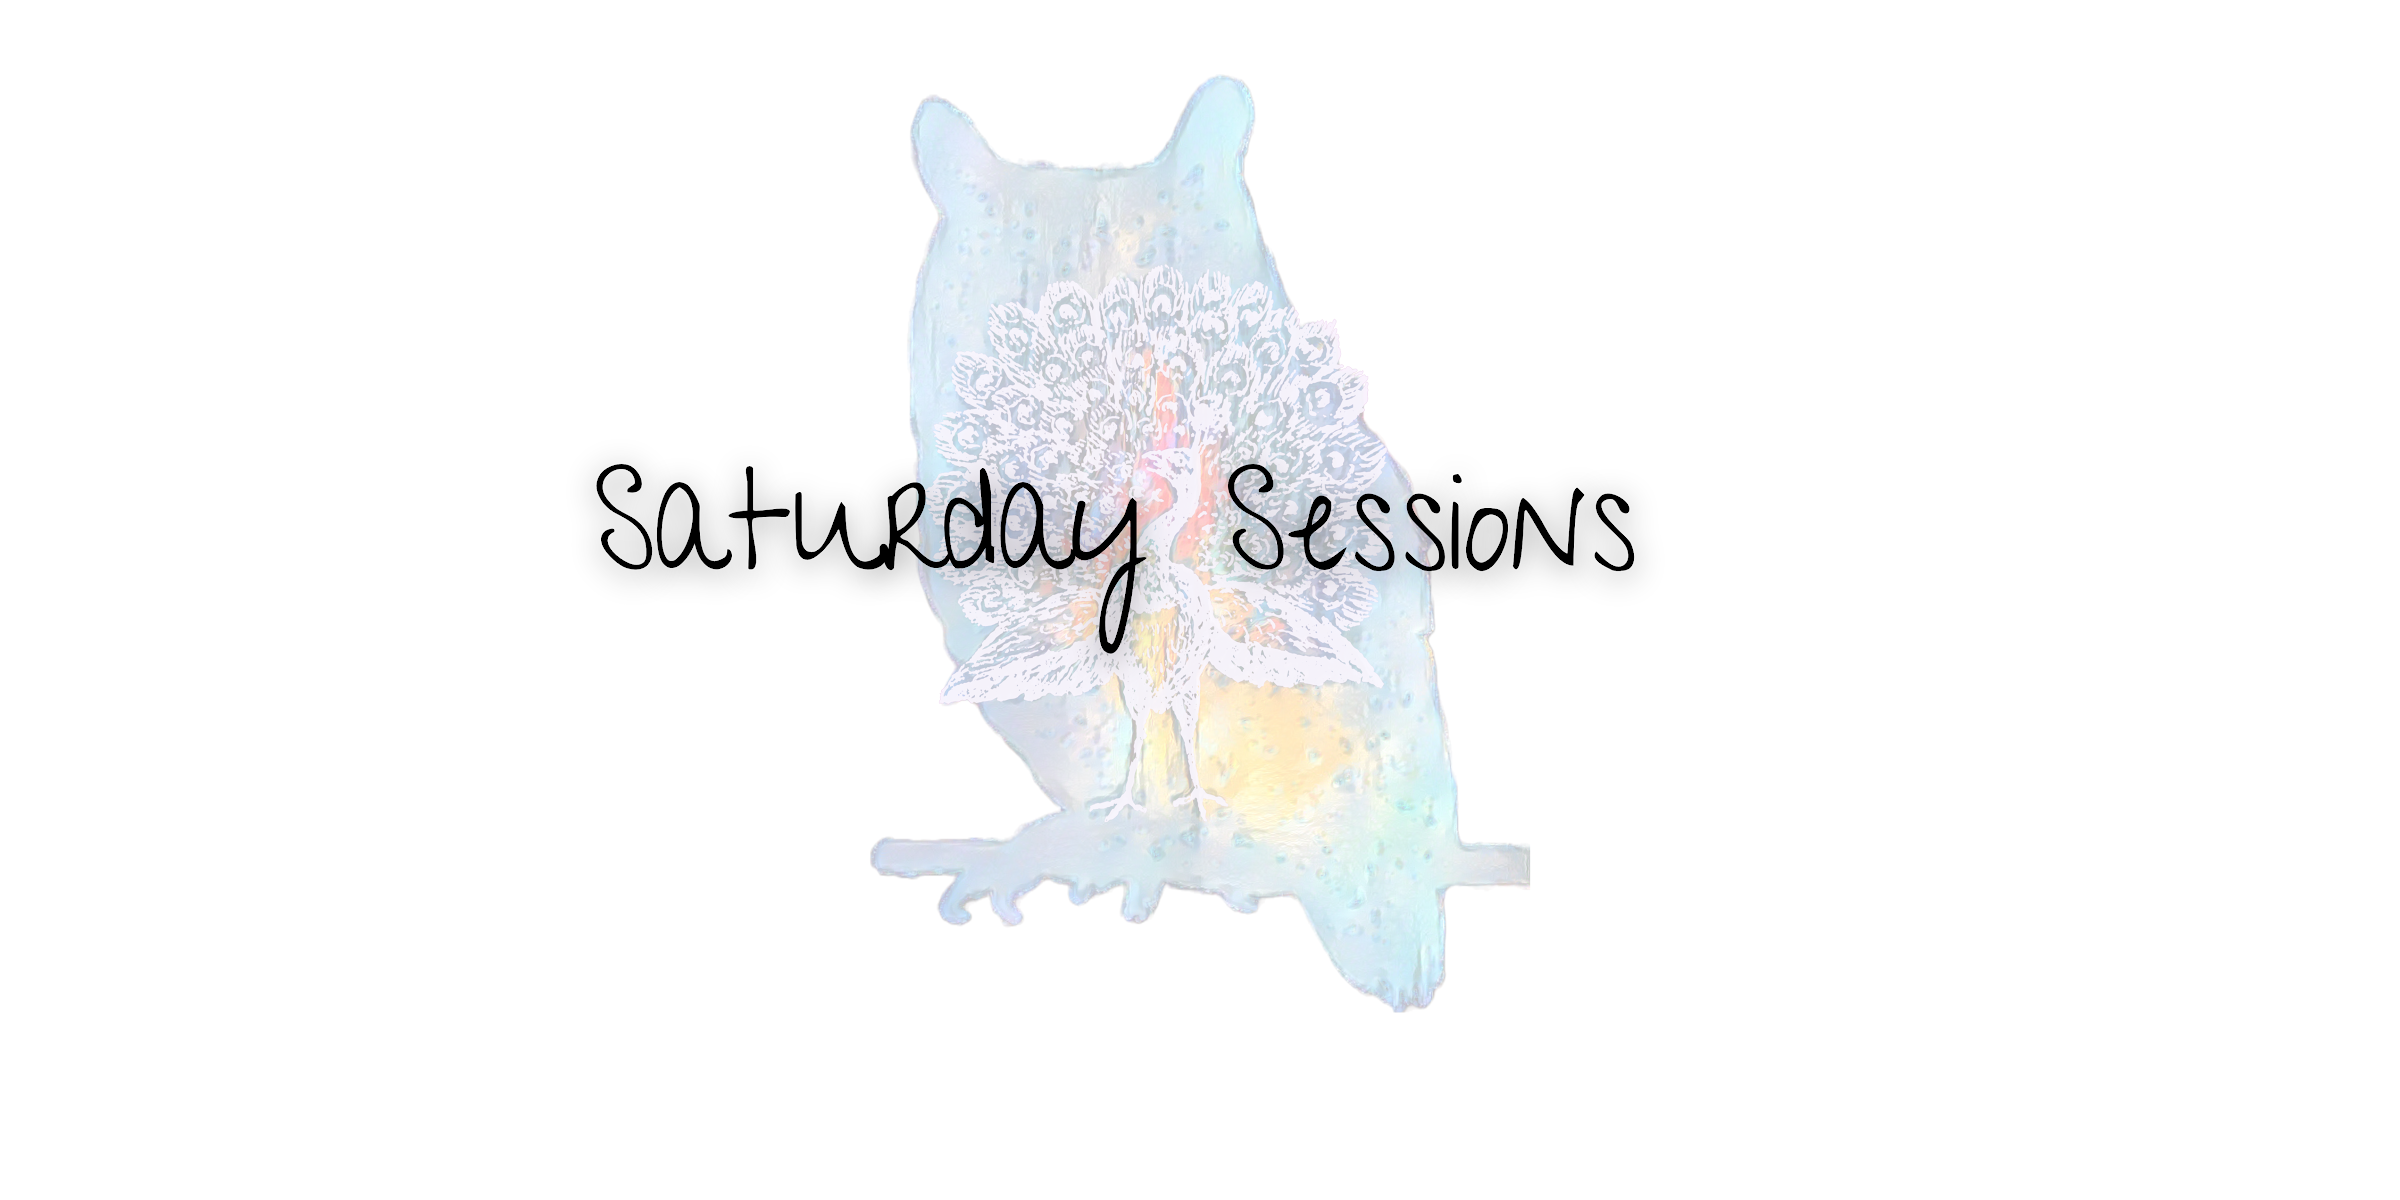 Saturday Sessions: 